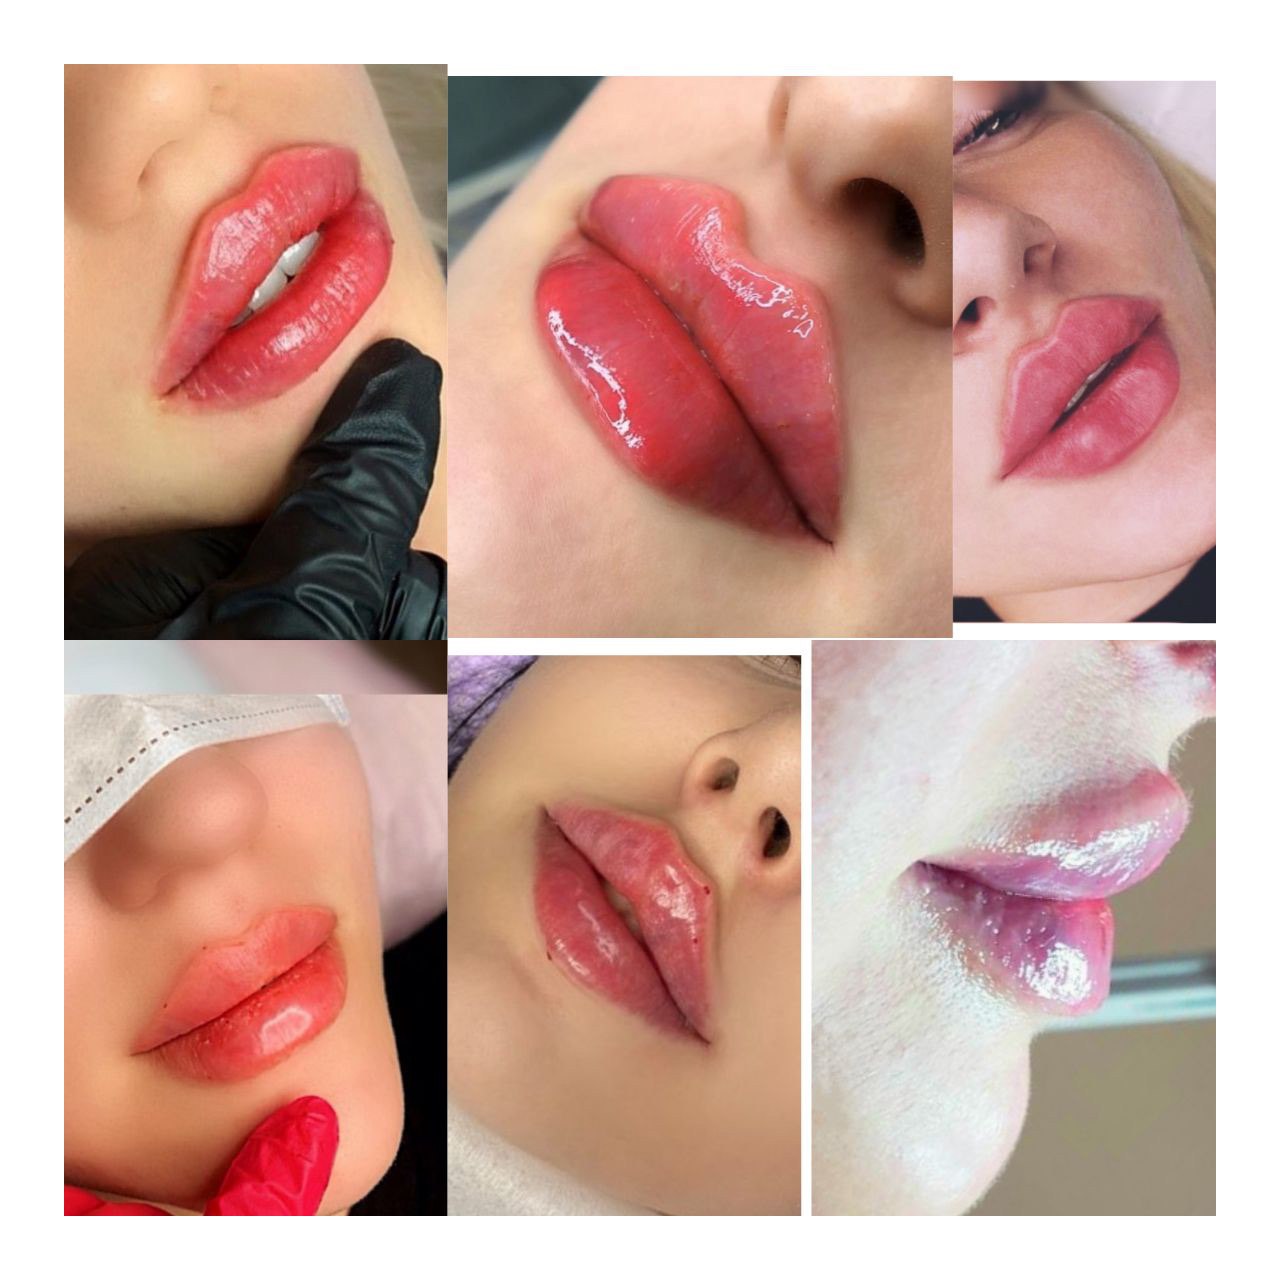 Техники увеличения губ с фото. Форма губ для увеличения. Увеличенные губы красивые.